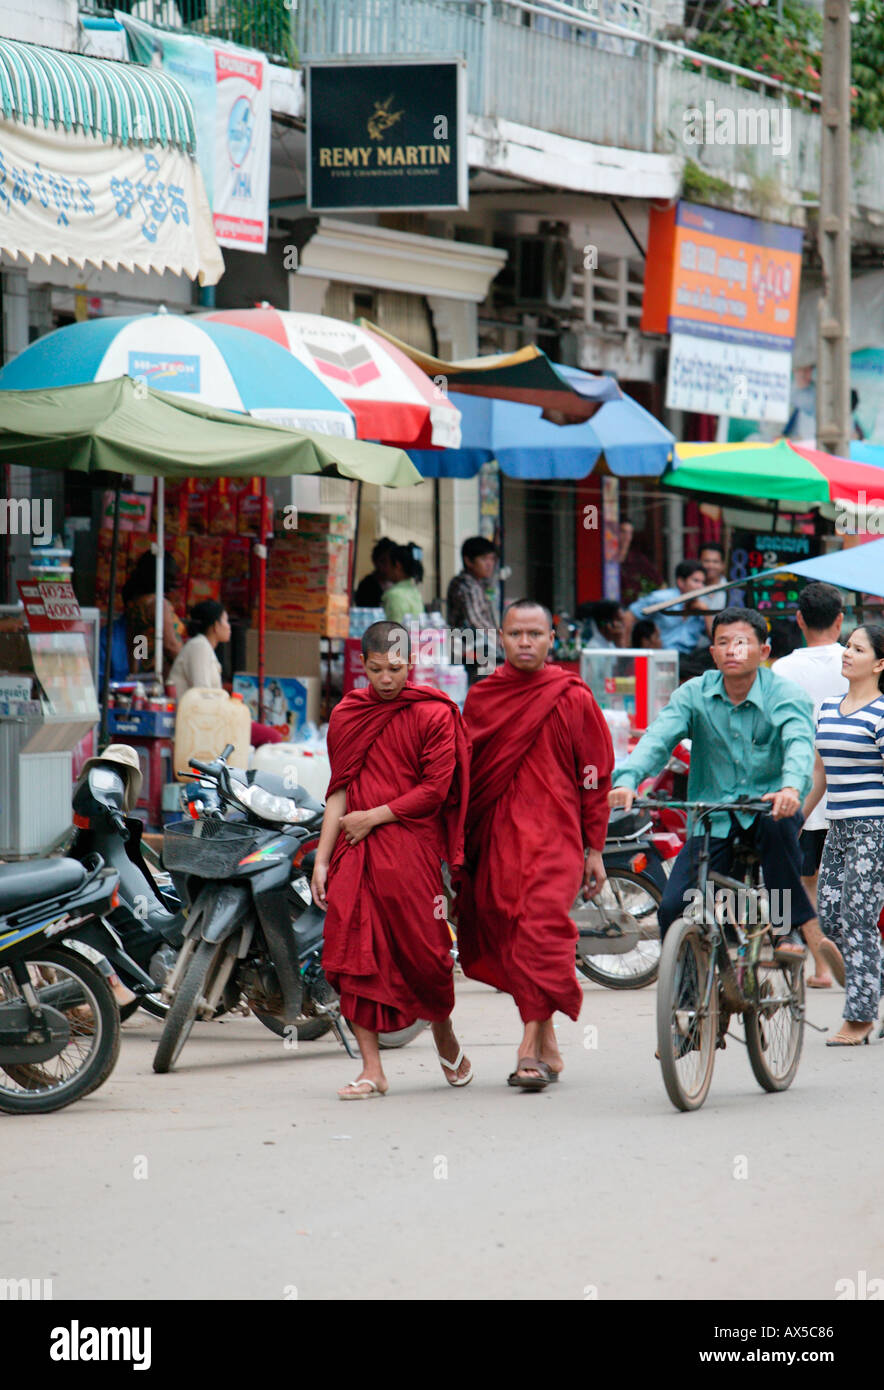 Bild T0312054 Mönche auf Straße in Phnom Penh Kambodscha Asien Stockfoto